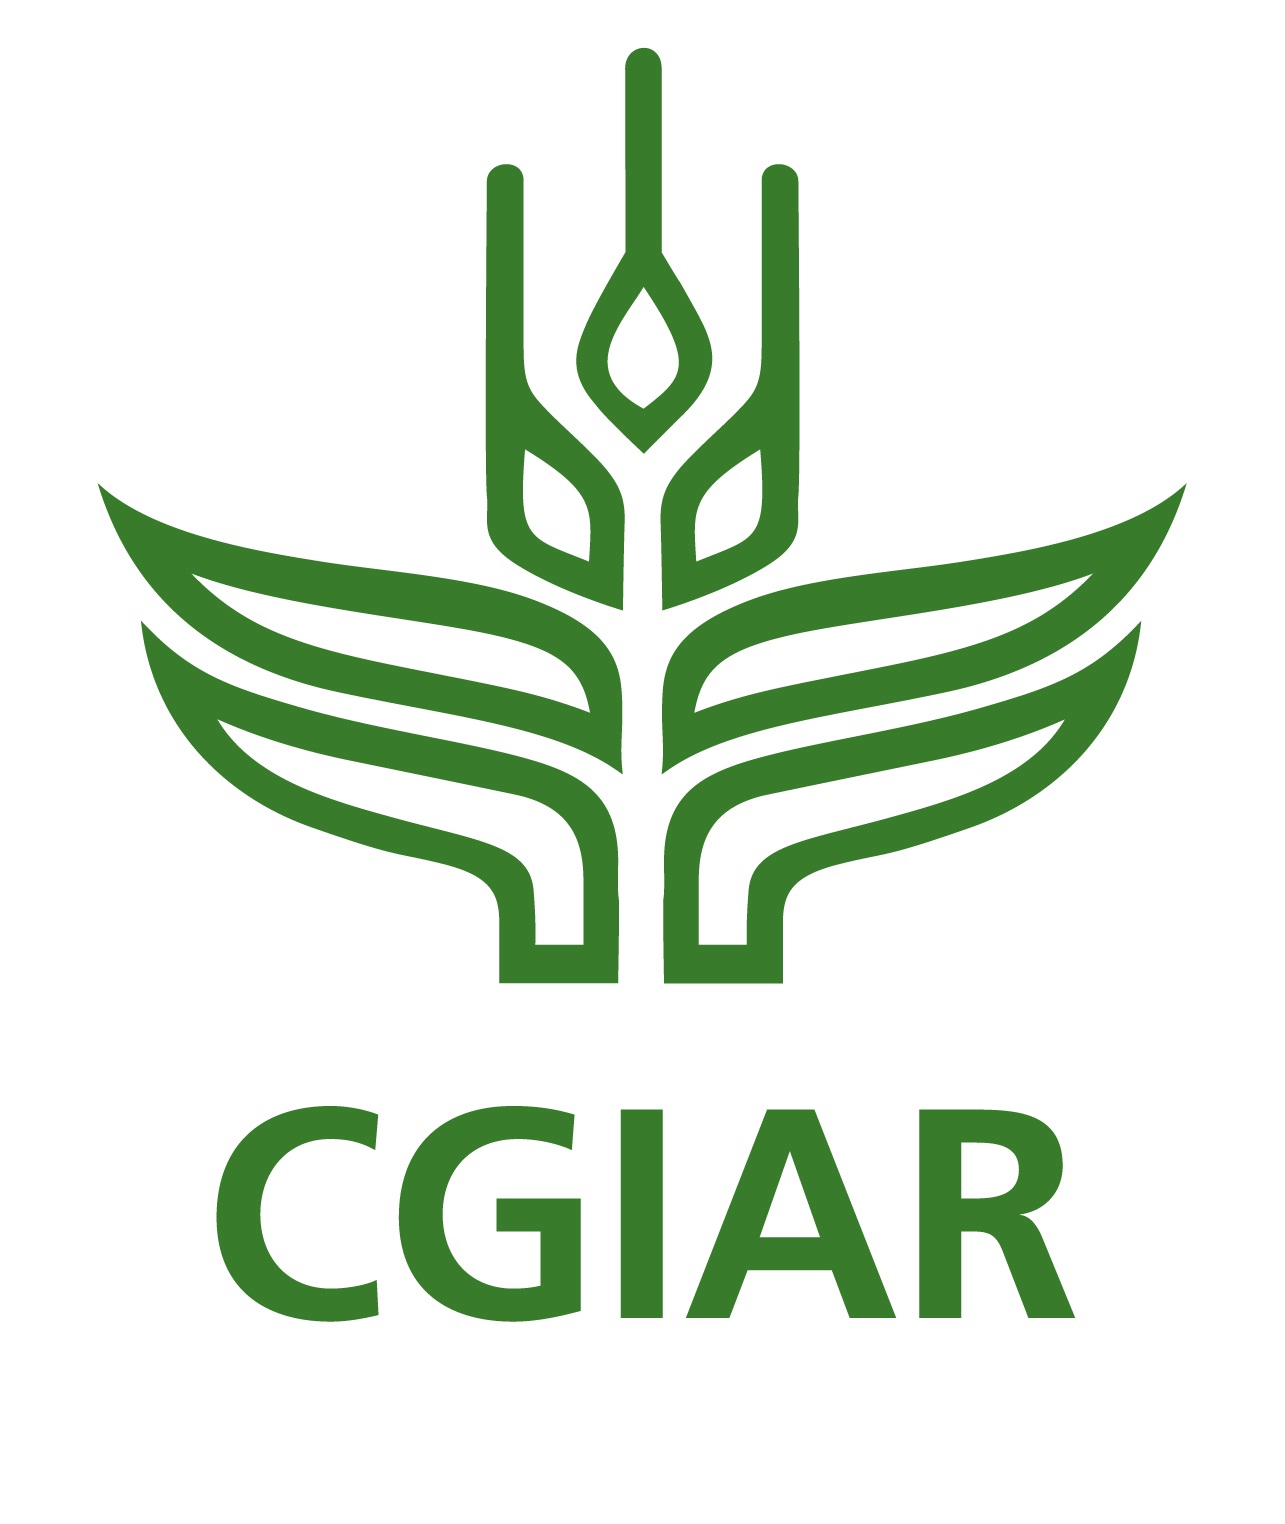 CGIAR logo.jpg